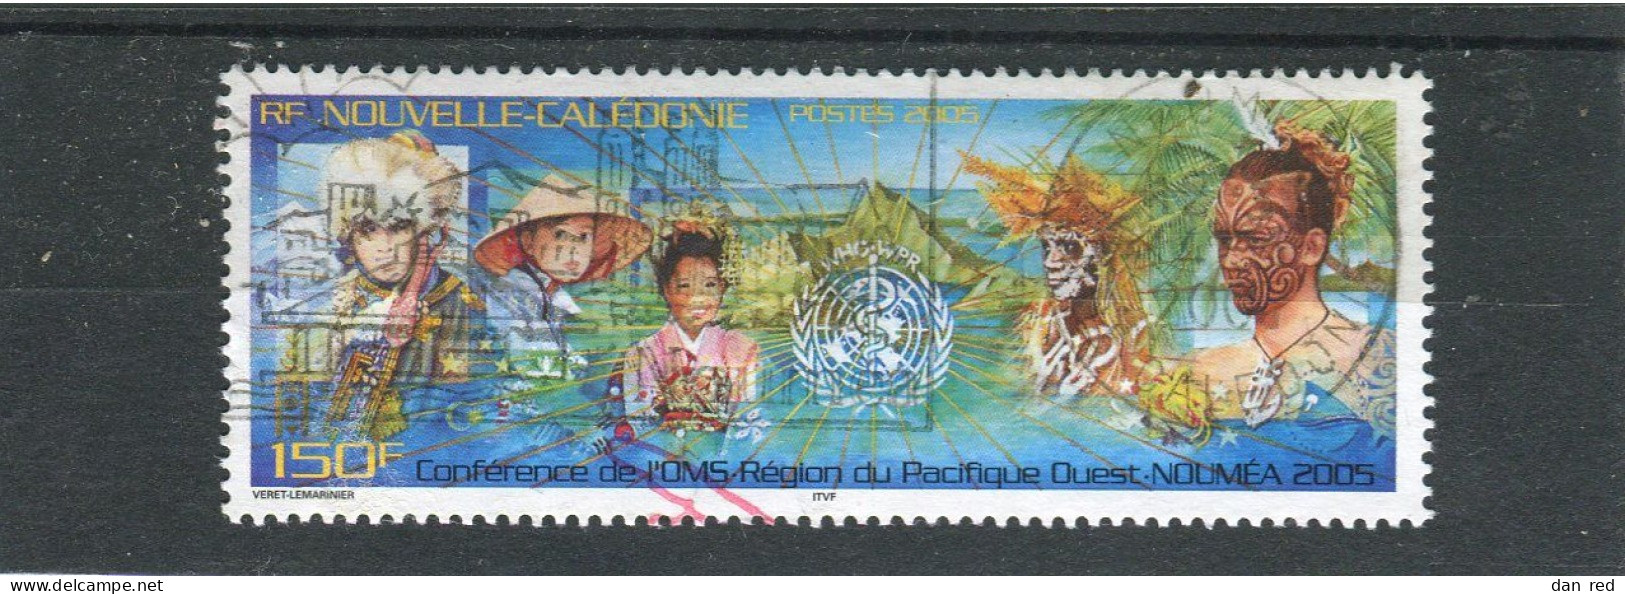 NOUVELLE CALEDONIE N° 952 (Y&T) (Oblitéré) - Used Stamps